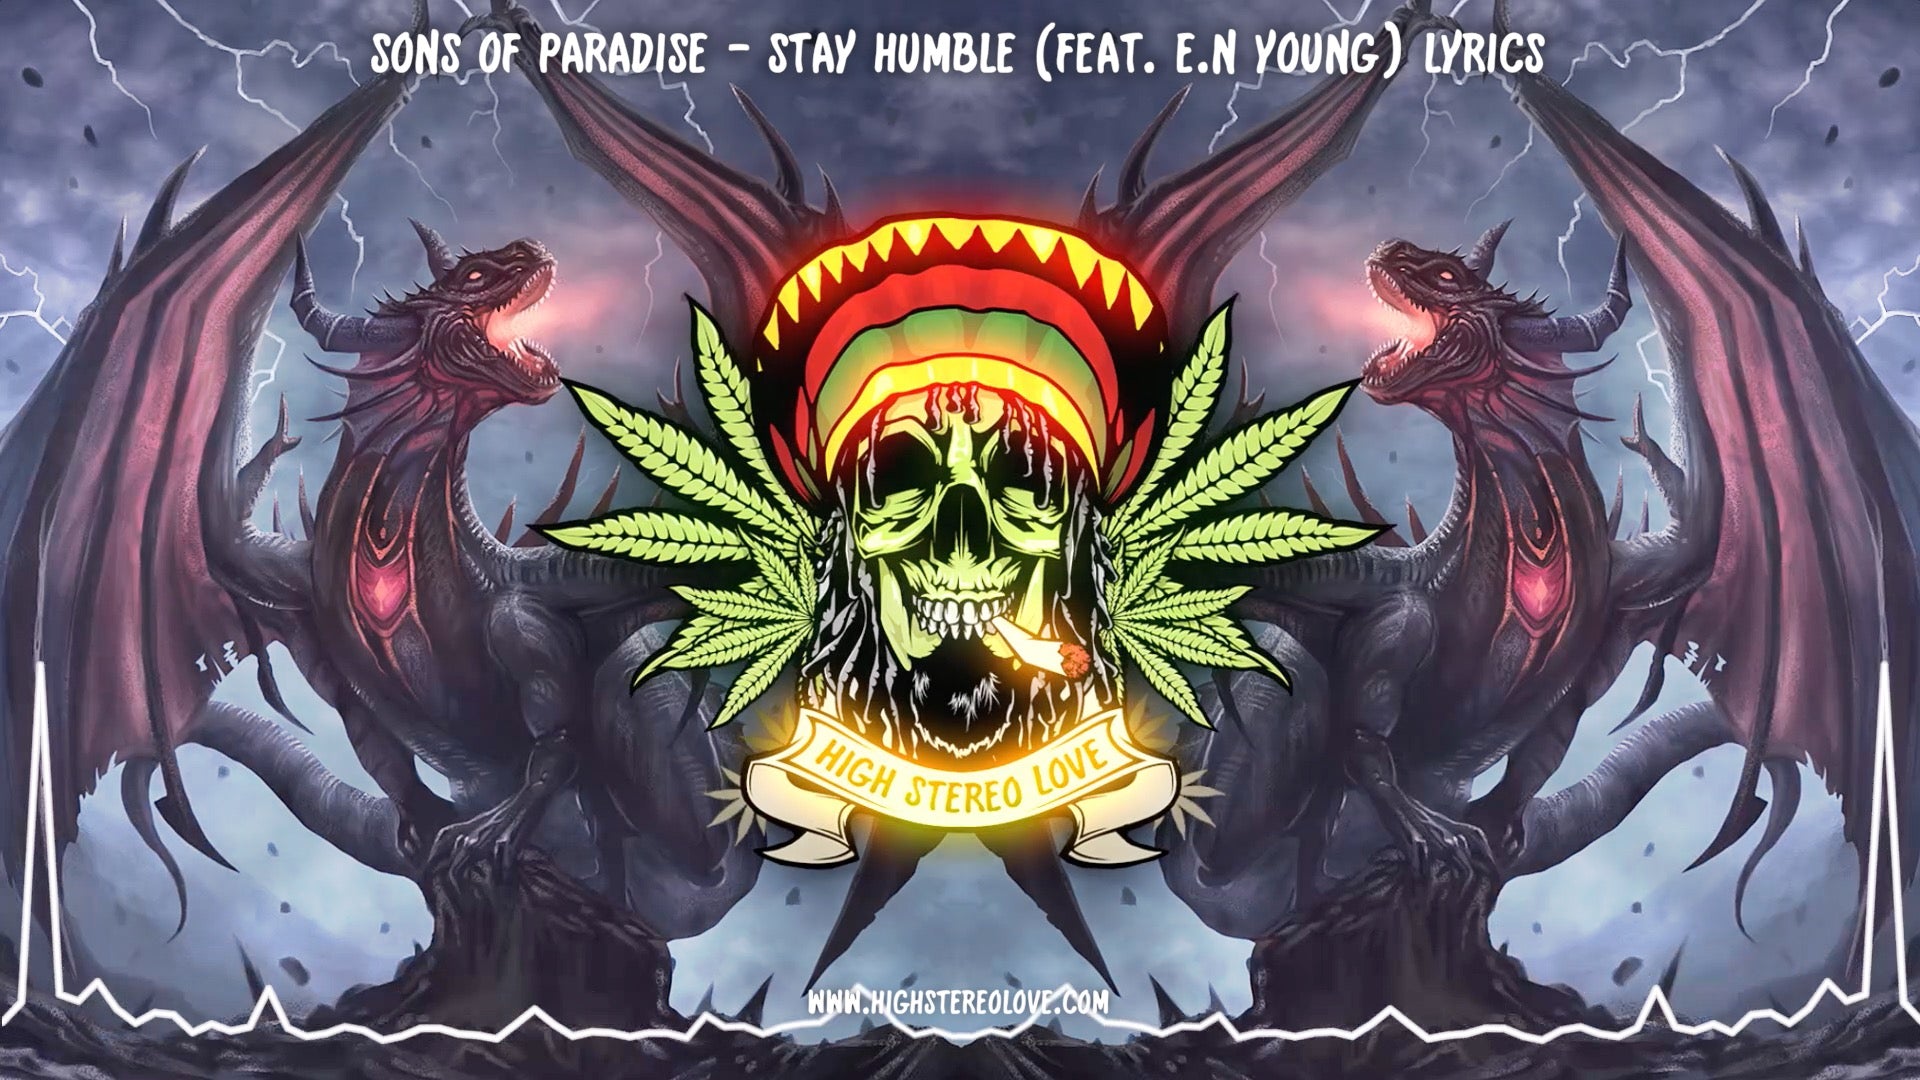 Stick Figure – Paradise (Official Lyric Video) 